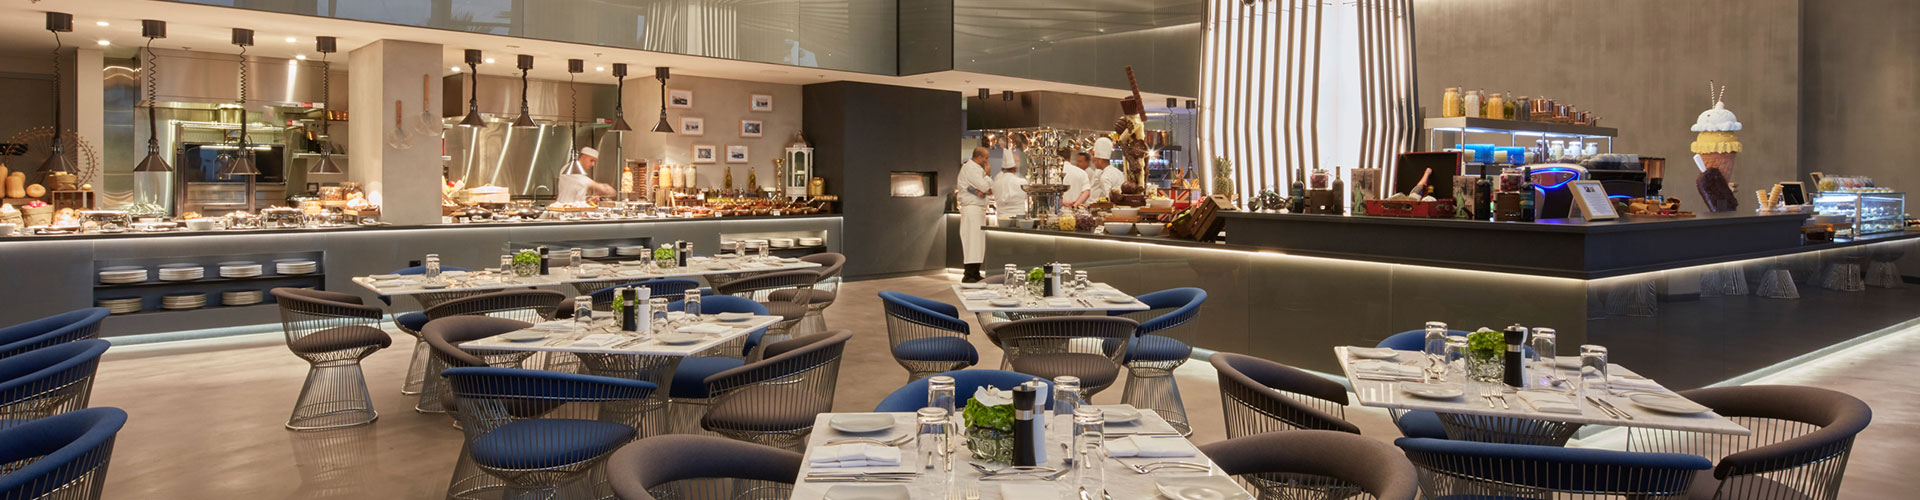 Bacchanal Restaurant - Oysters, Crabs,  Grills | Blue Waters, Dubai, UAE